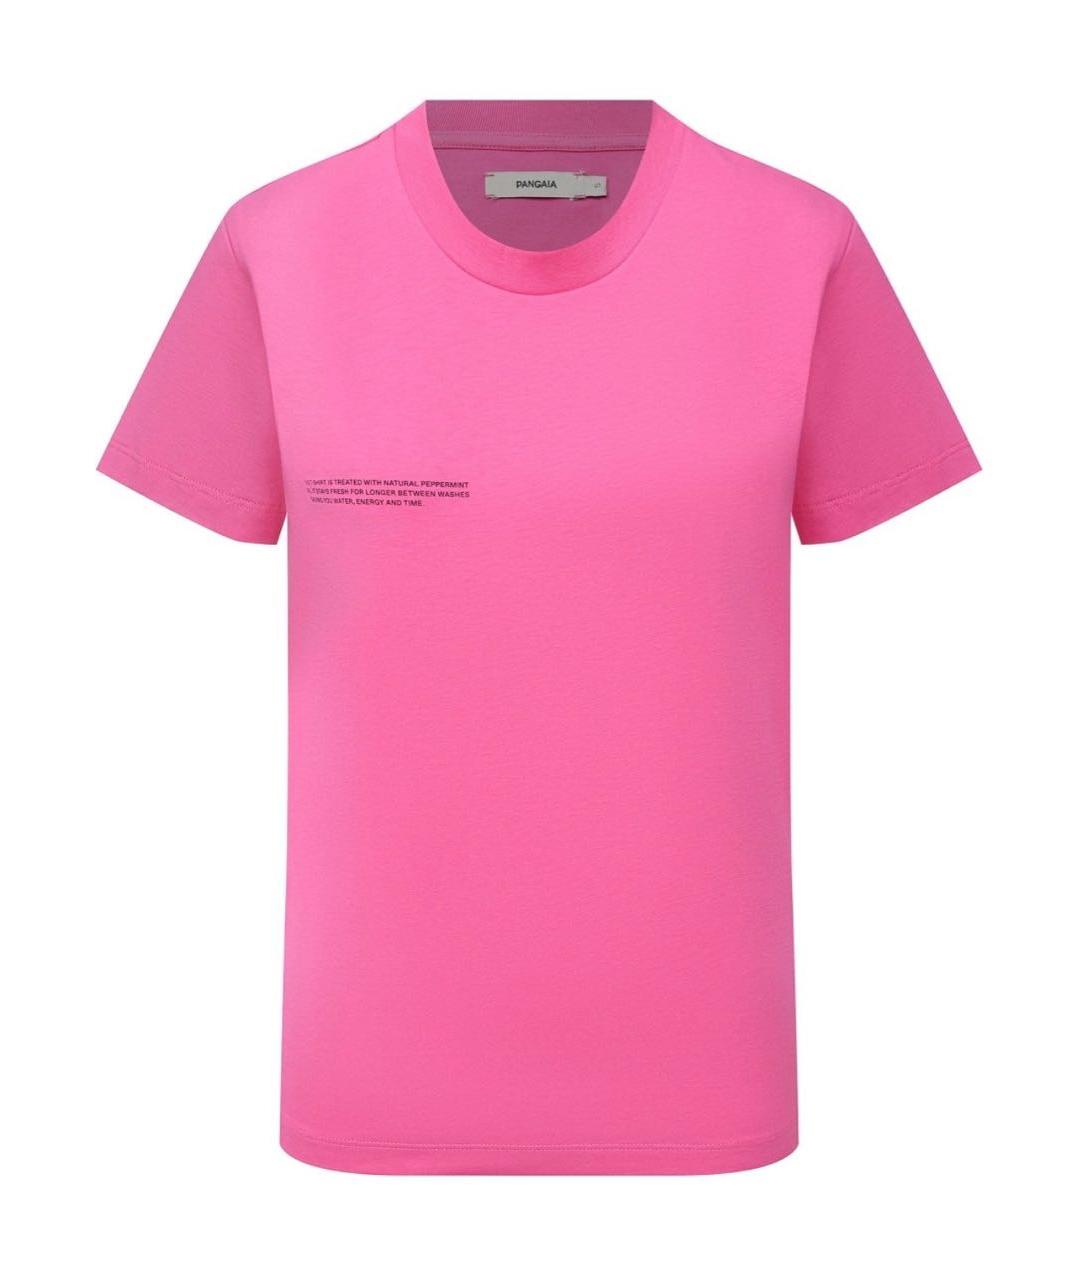 THE PANGAIA Розовая хлопковая футболка, фото 1